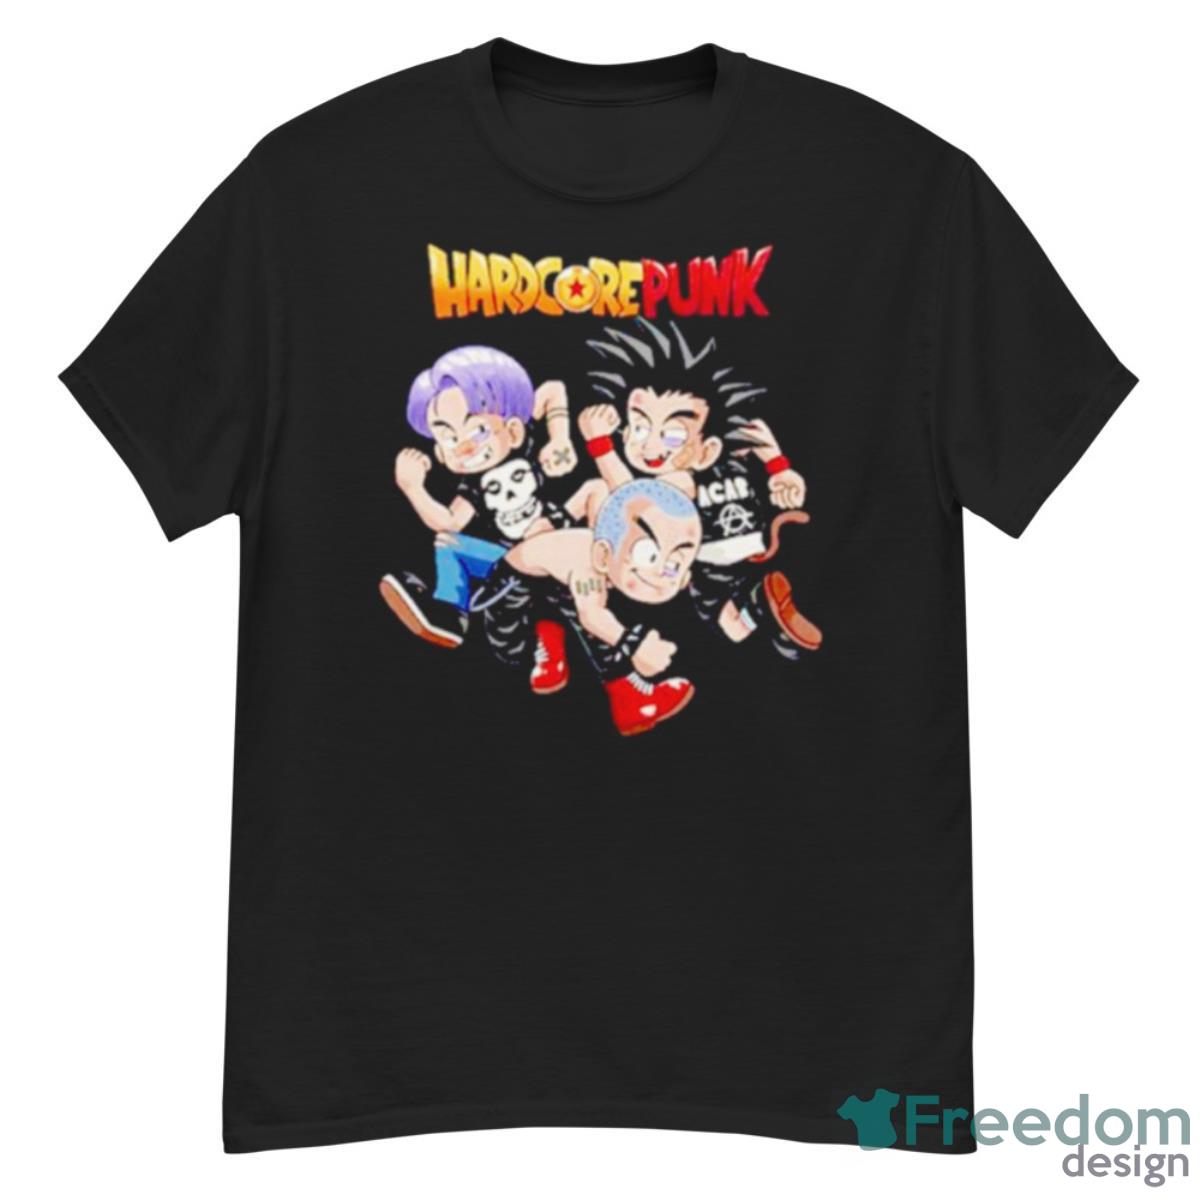 Hardcore Punk Shirt - G500 Men’s Classic T-Shirt